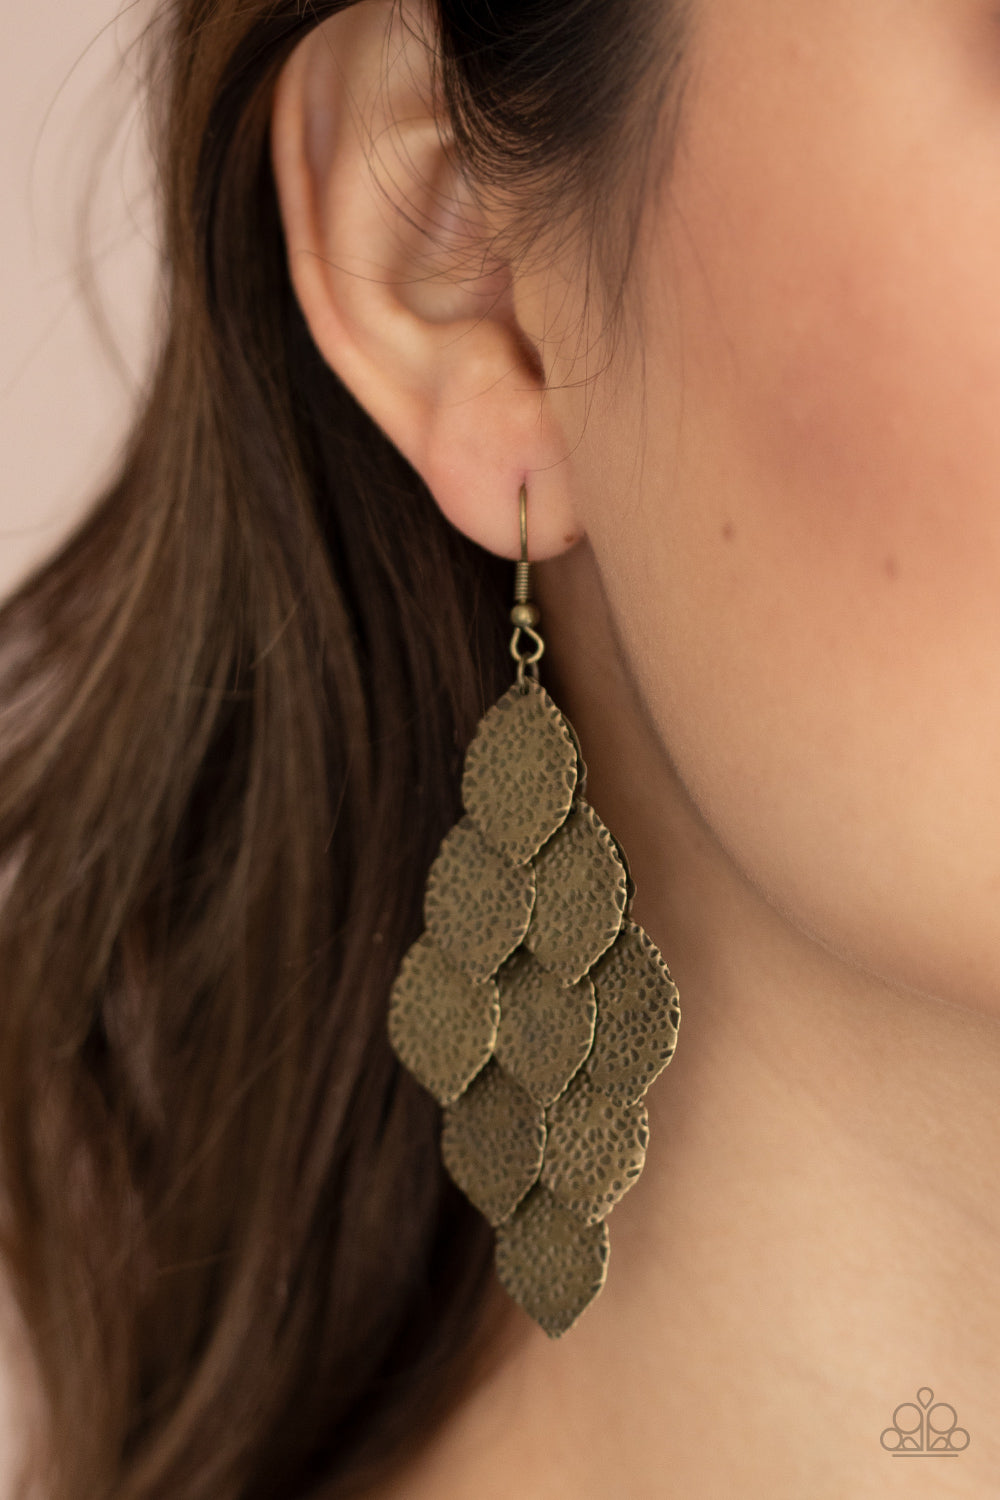 Loud and Leafy Earring (Brass, Copper)